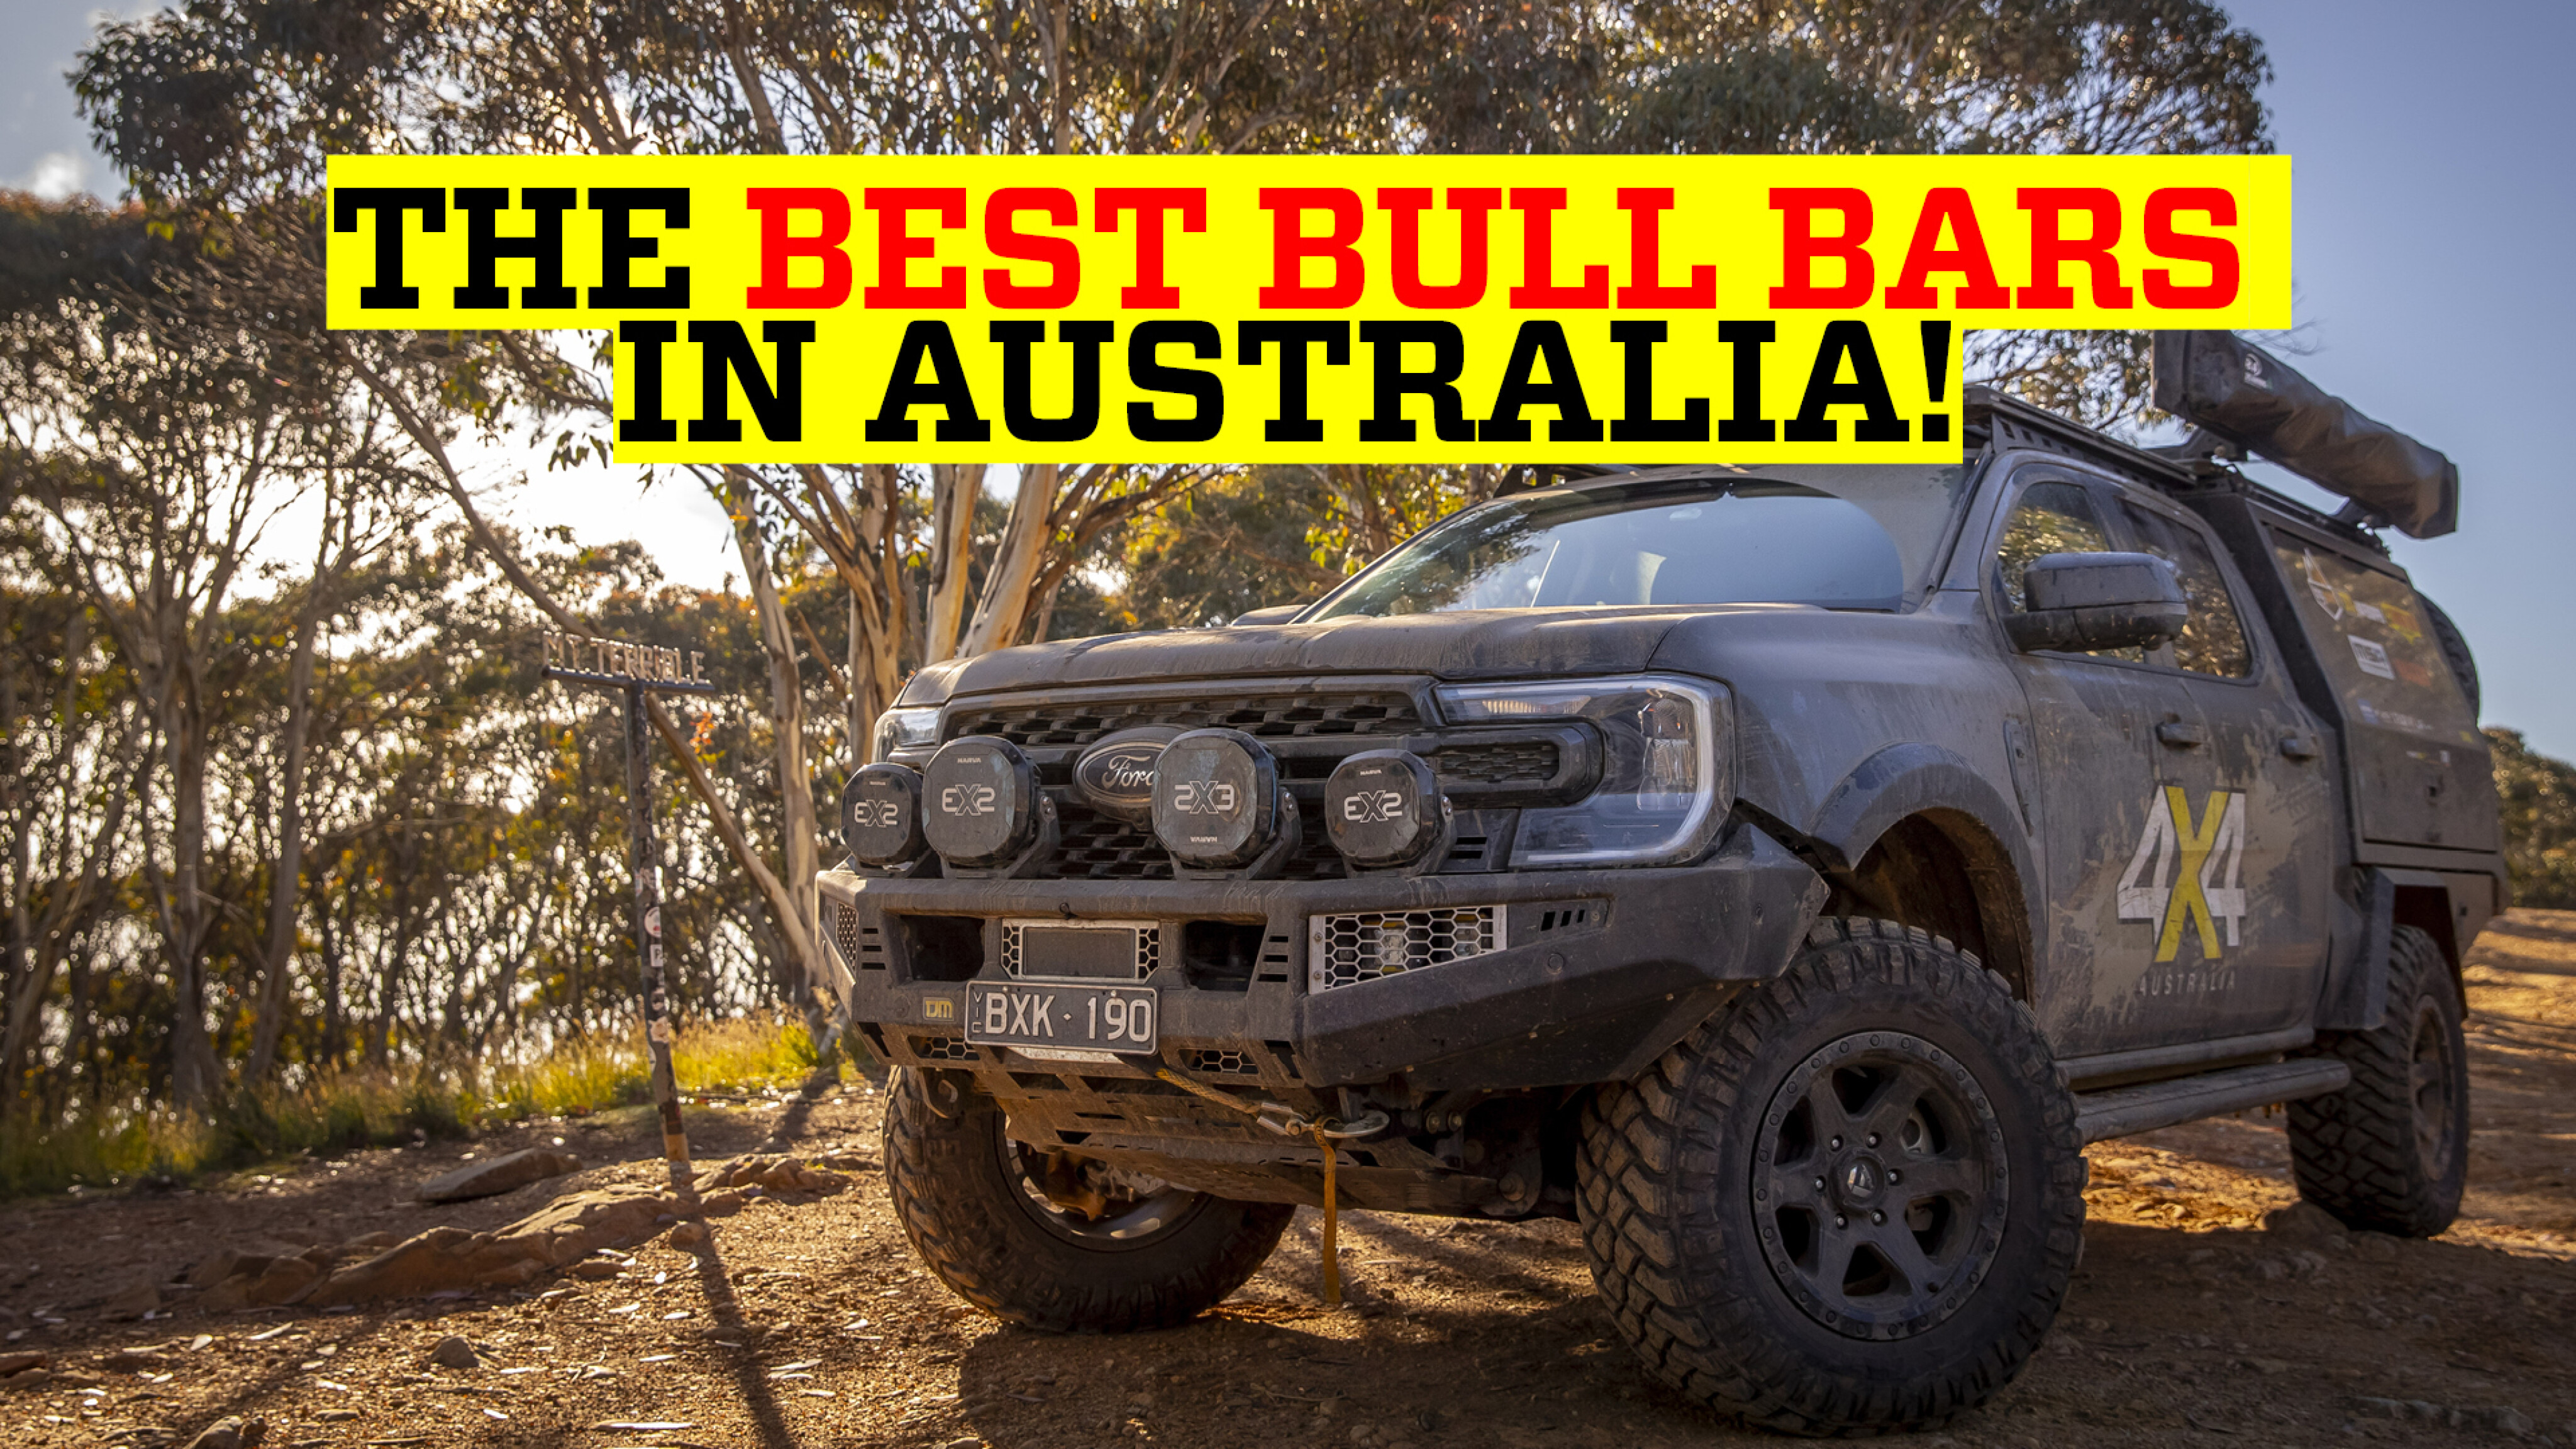 6daf13fa/best bull bars australia guide jpg